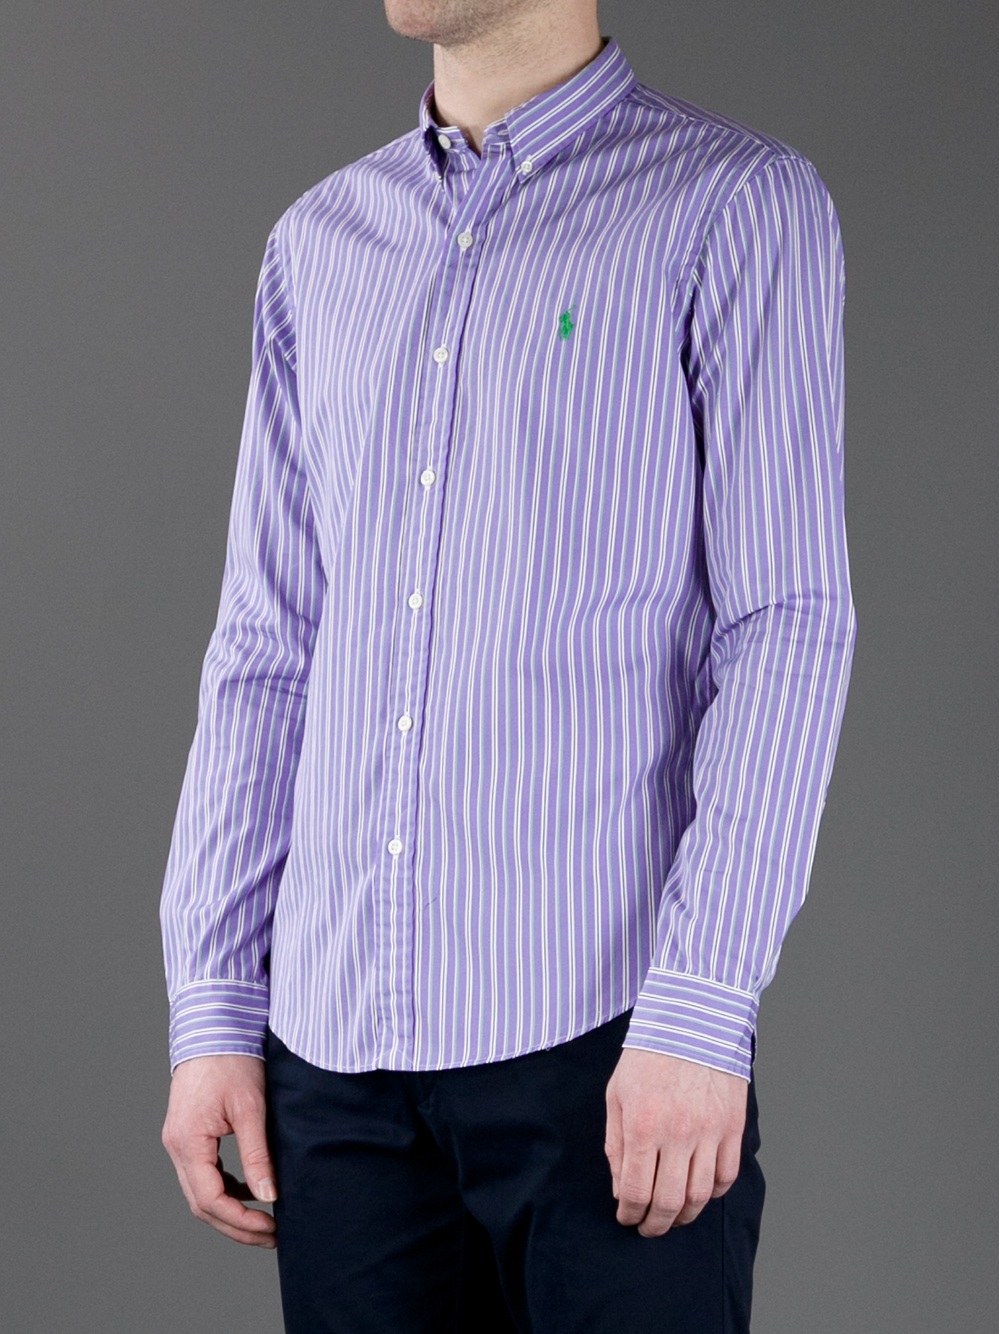 Lyst Polo Ralph Lauren Striped Shirt In Purple For Men 